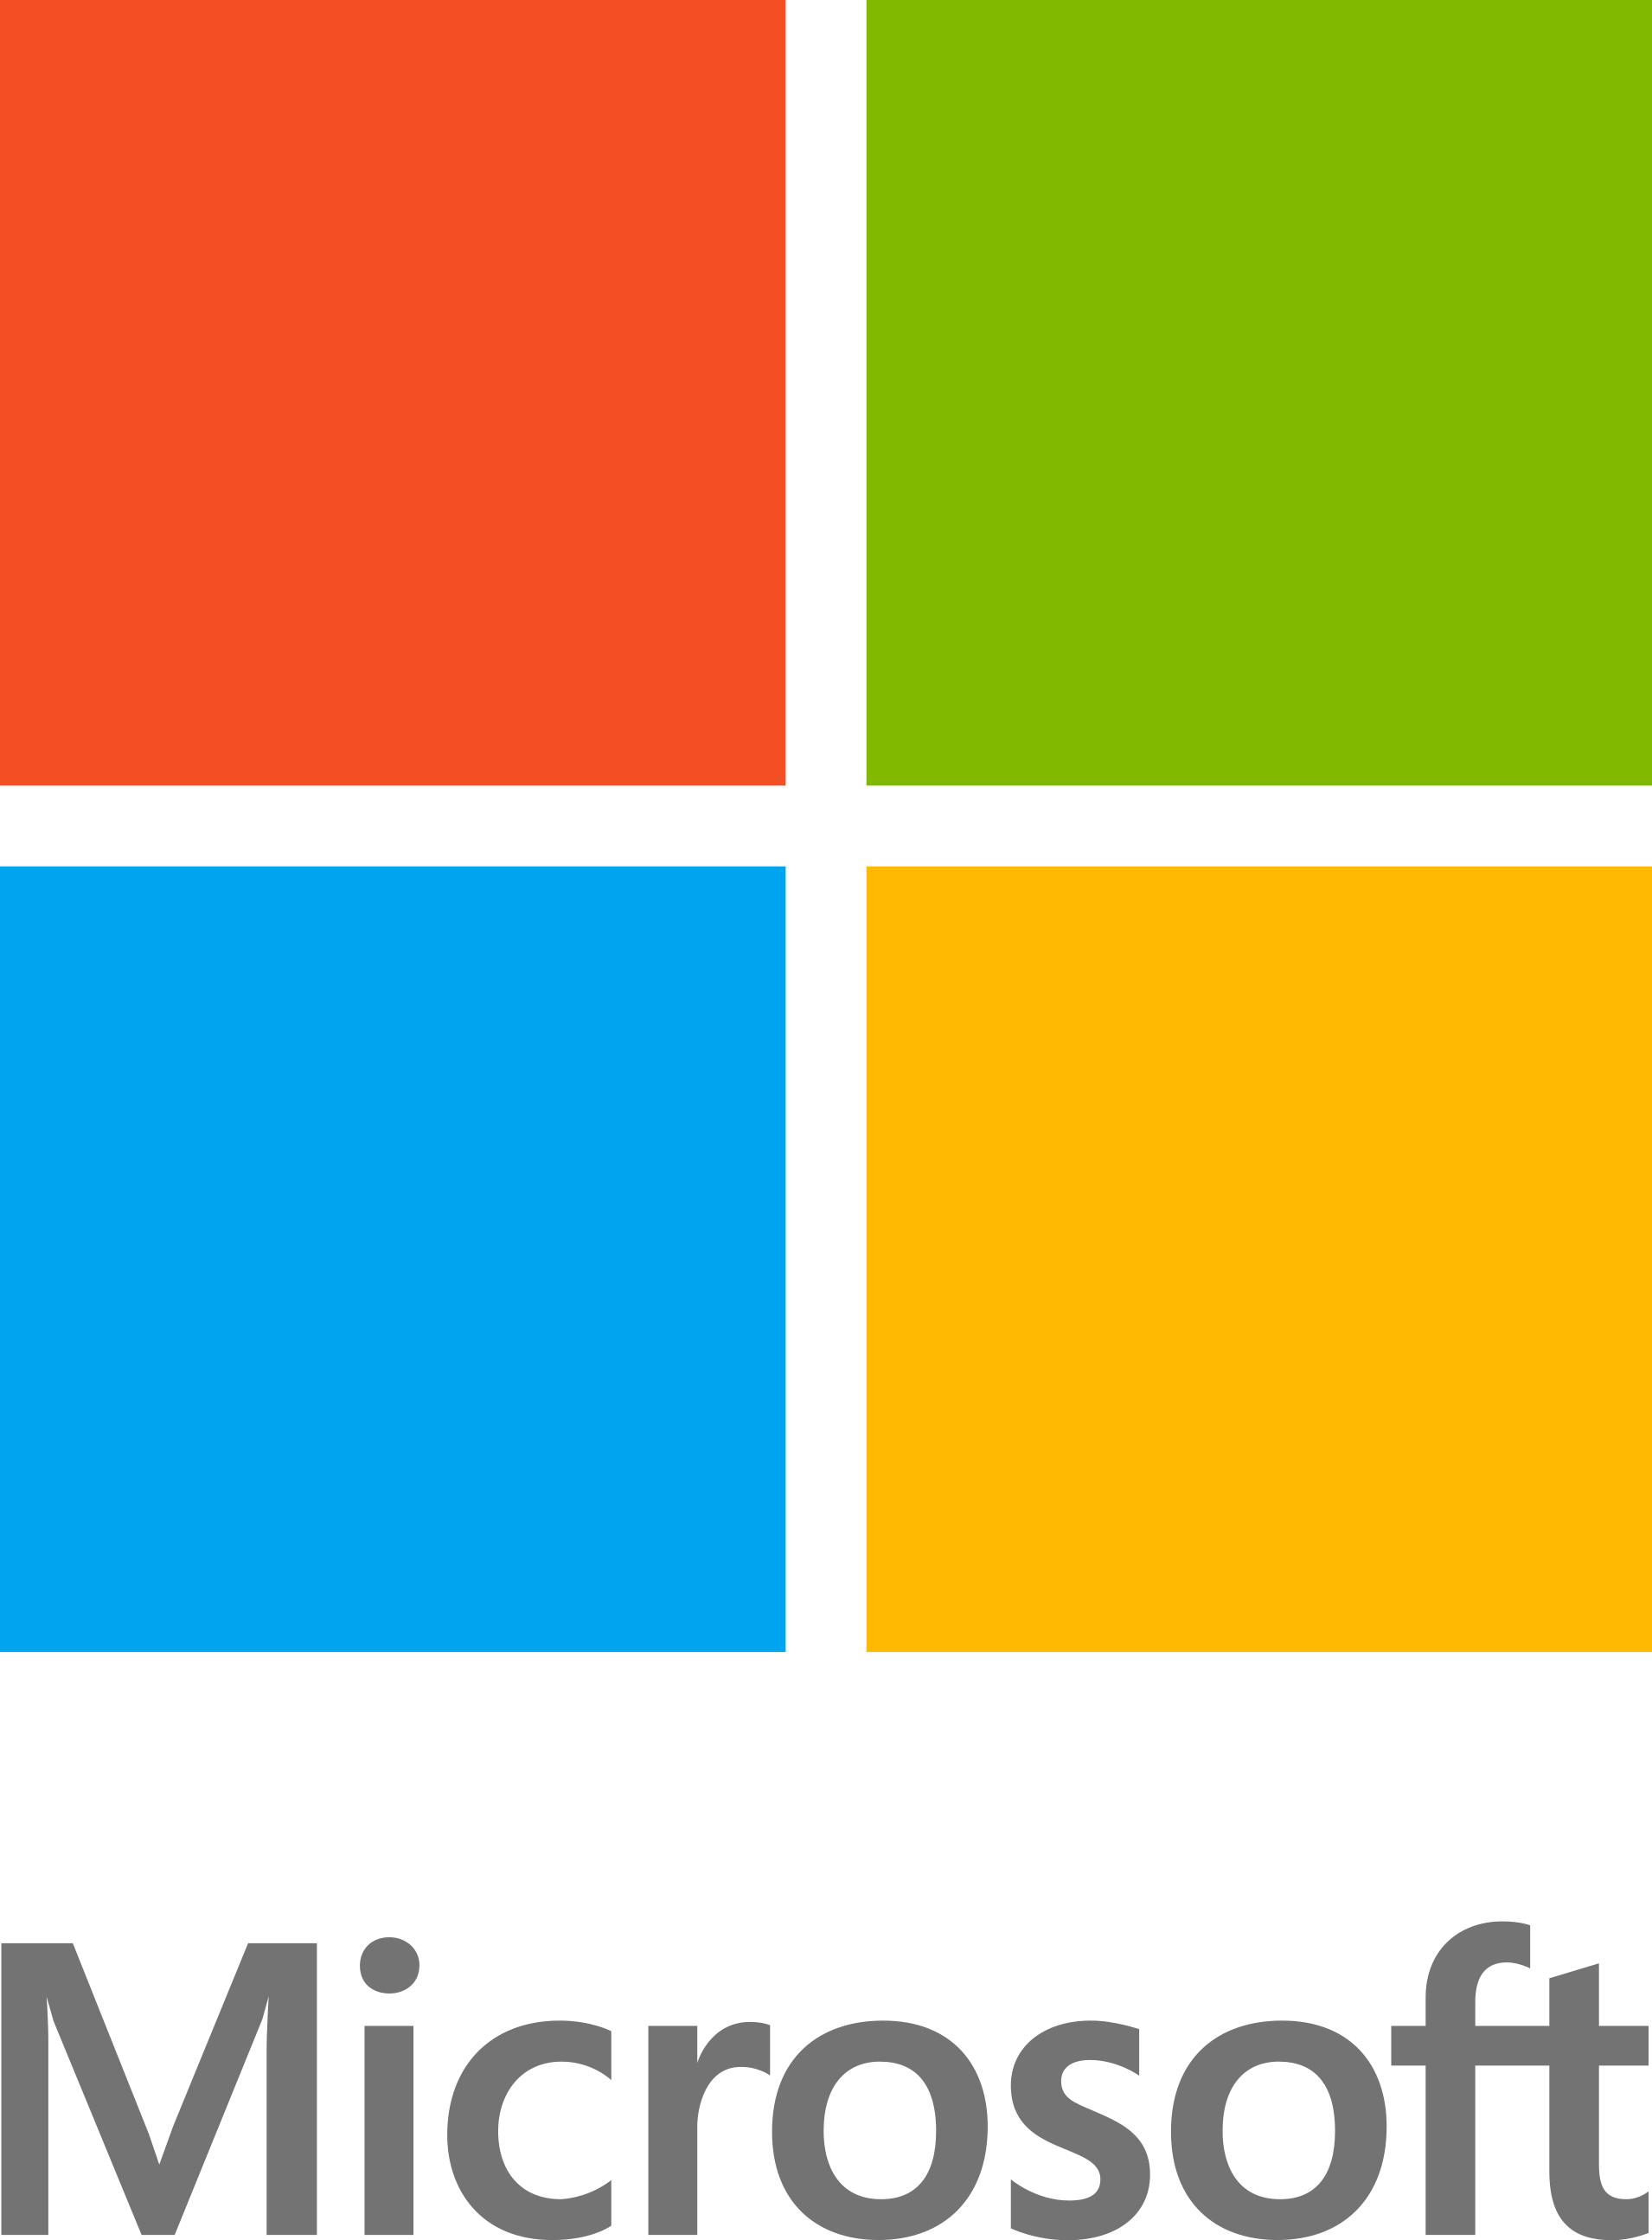 File:Microsoft logo - 2012 (vertical).svg - Wikimedia Commons